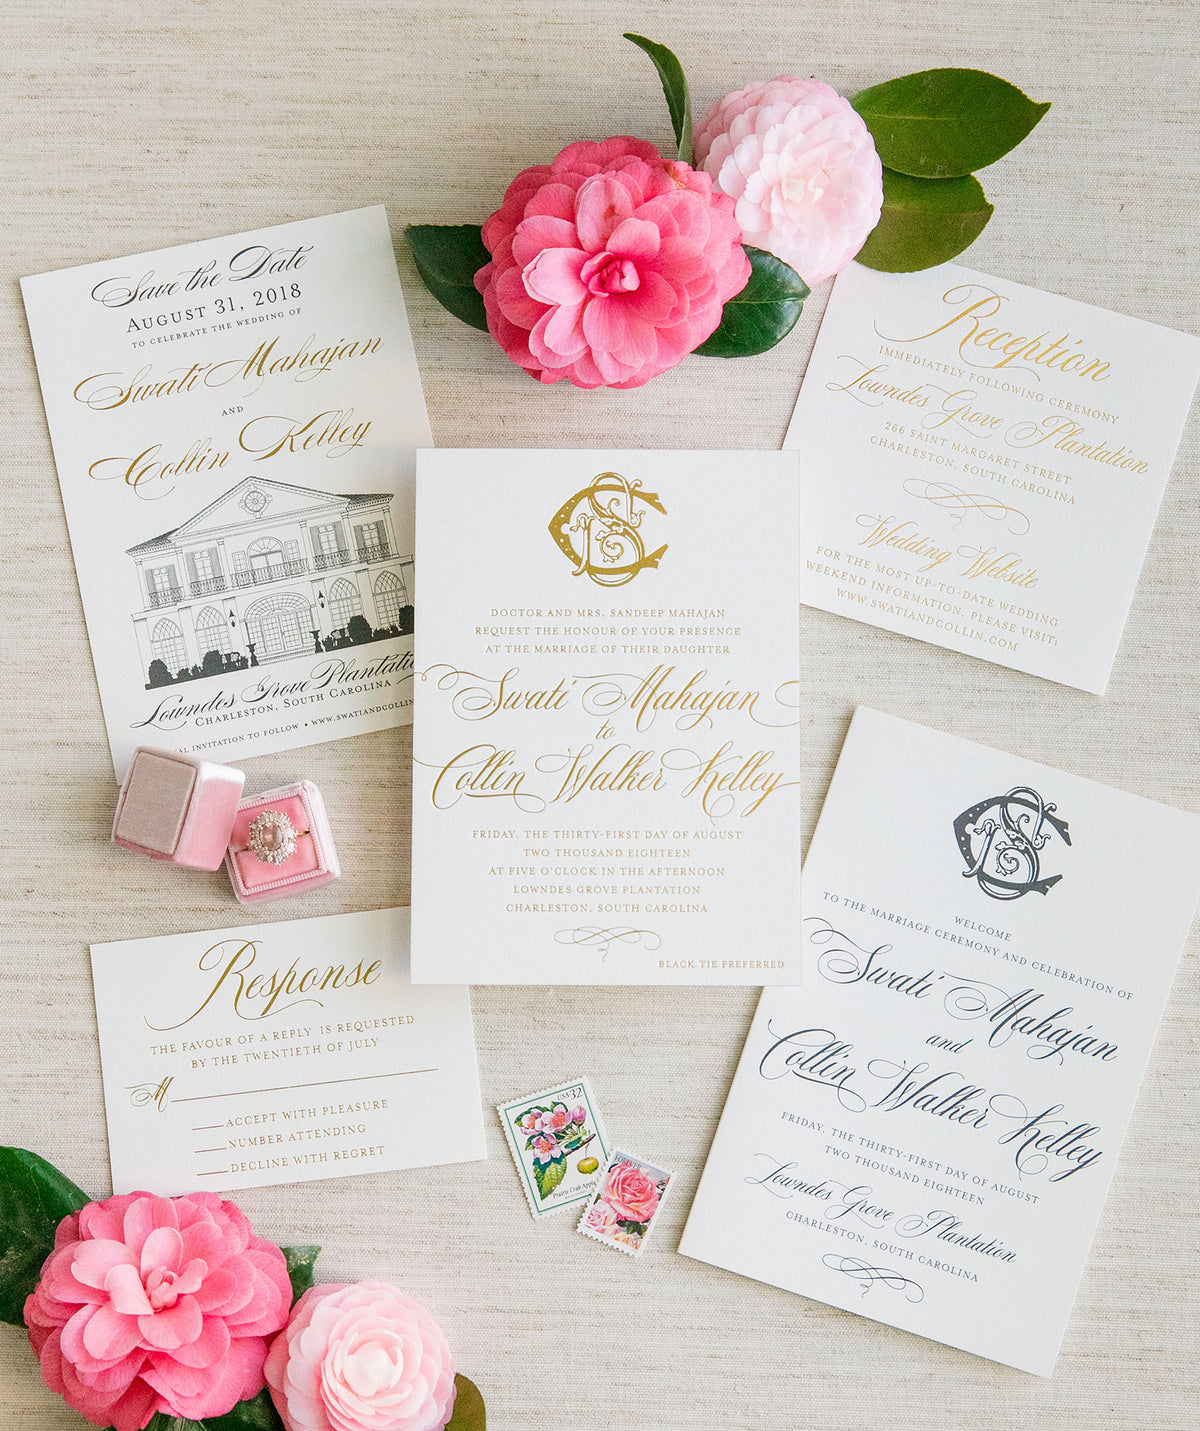 Monogram Gold Foil Wedding Invitation by Scotti Cline Designs | Photo by Dana Cubbage Weddings